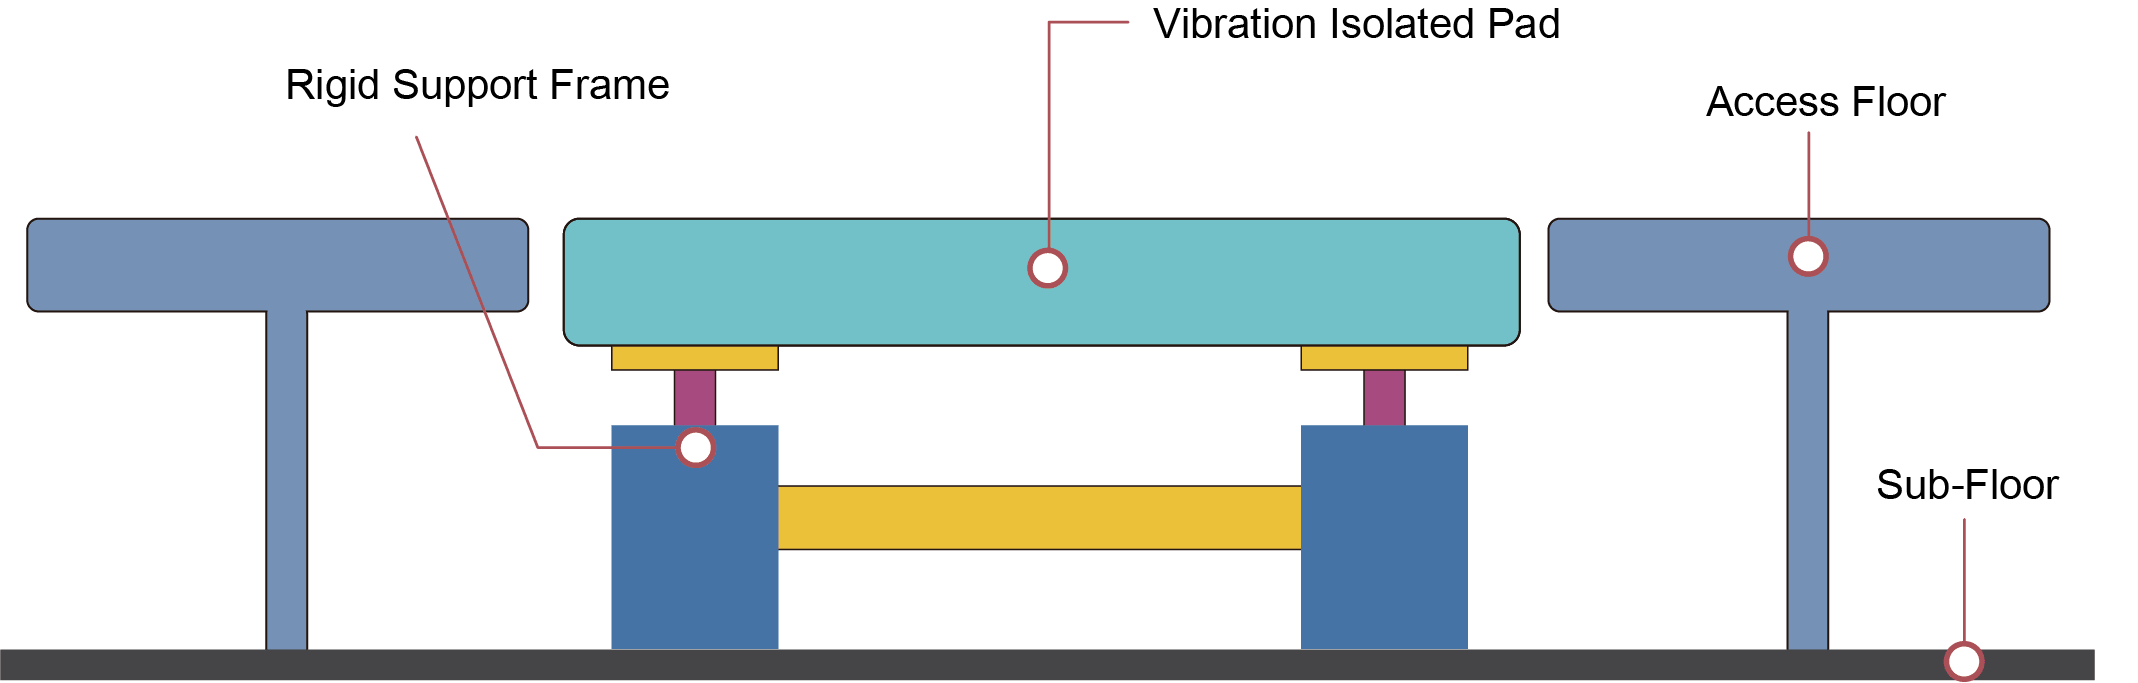 DVIF-Configuration-of-Vibration-Isolated-Foundation